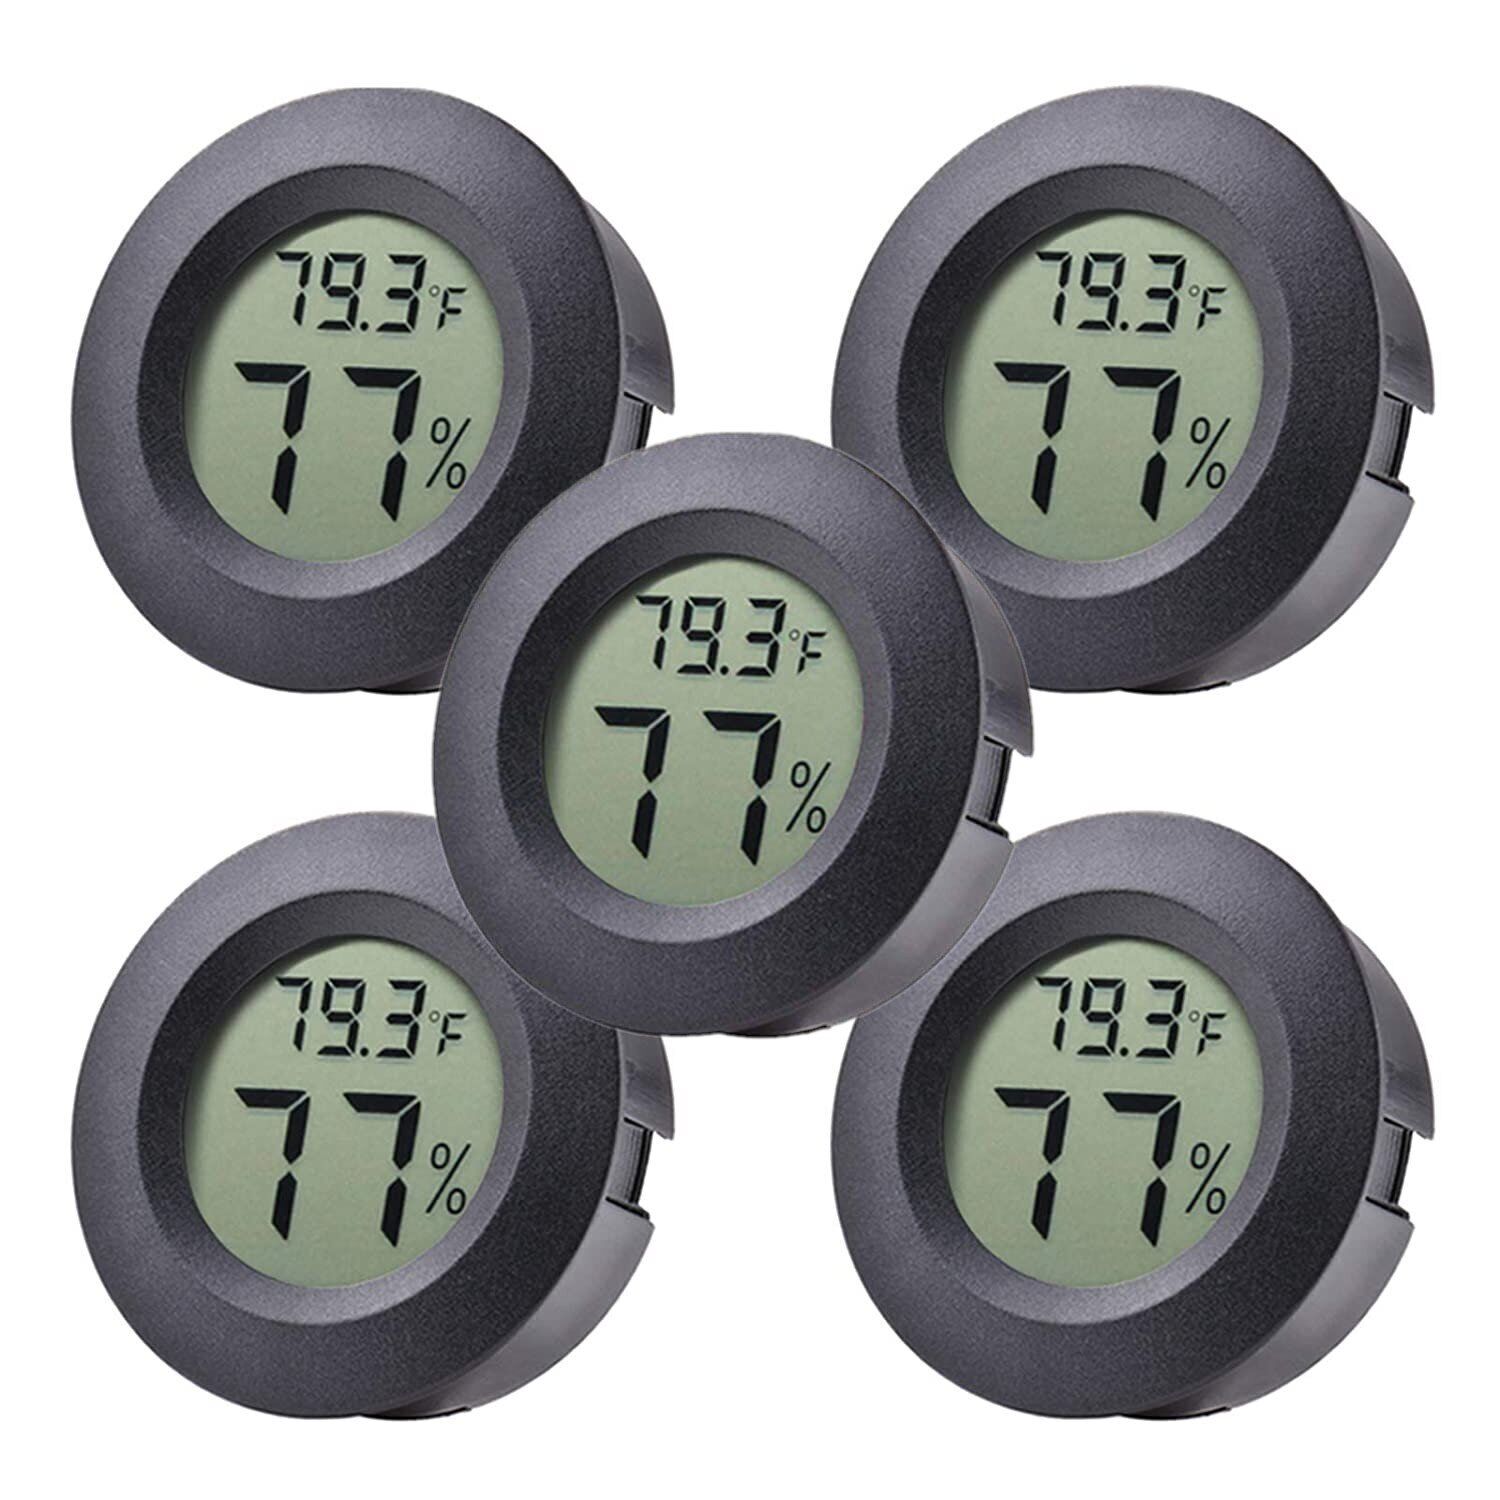 5 Pcs Mini LCD Digital Thermometer Hygrometer Humidity Temperature Gauge Monitor